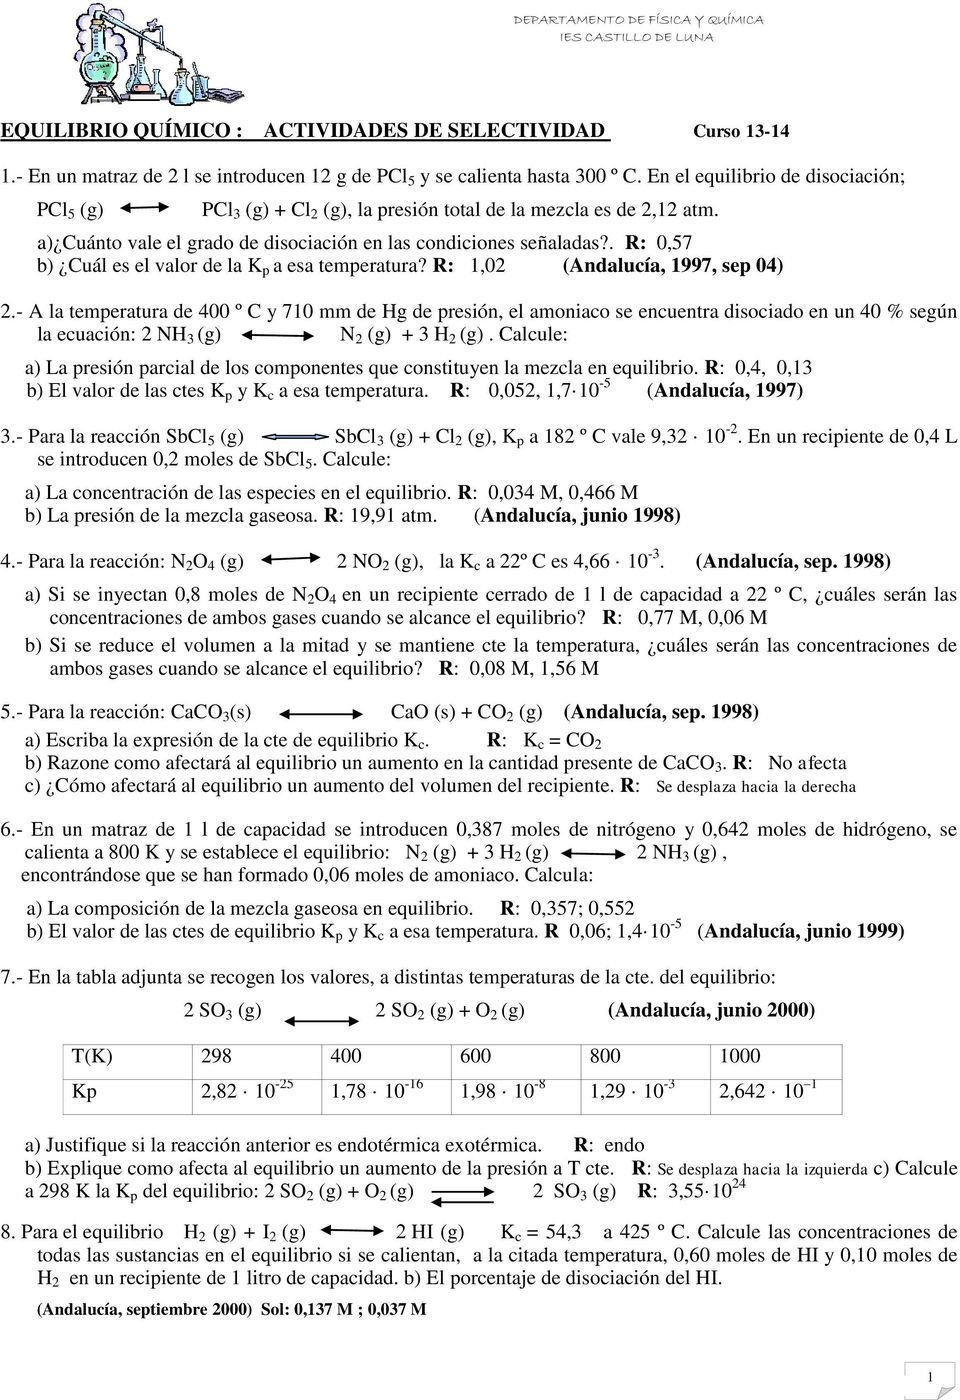 . R: 0,57 b) Cuál es el valor de la K p a esa temperatura? R: 1,02 (Andalucía, 1997, sep 04) 2.